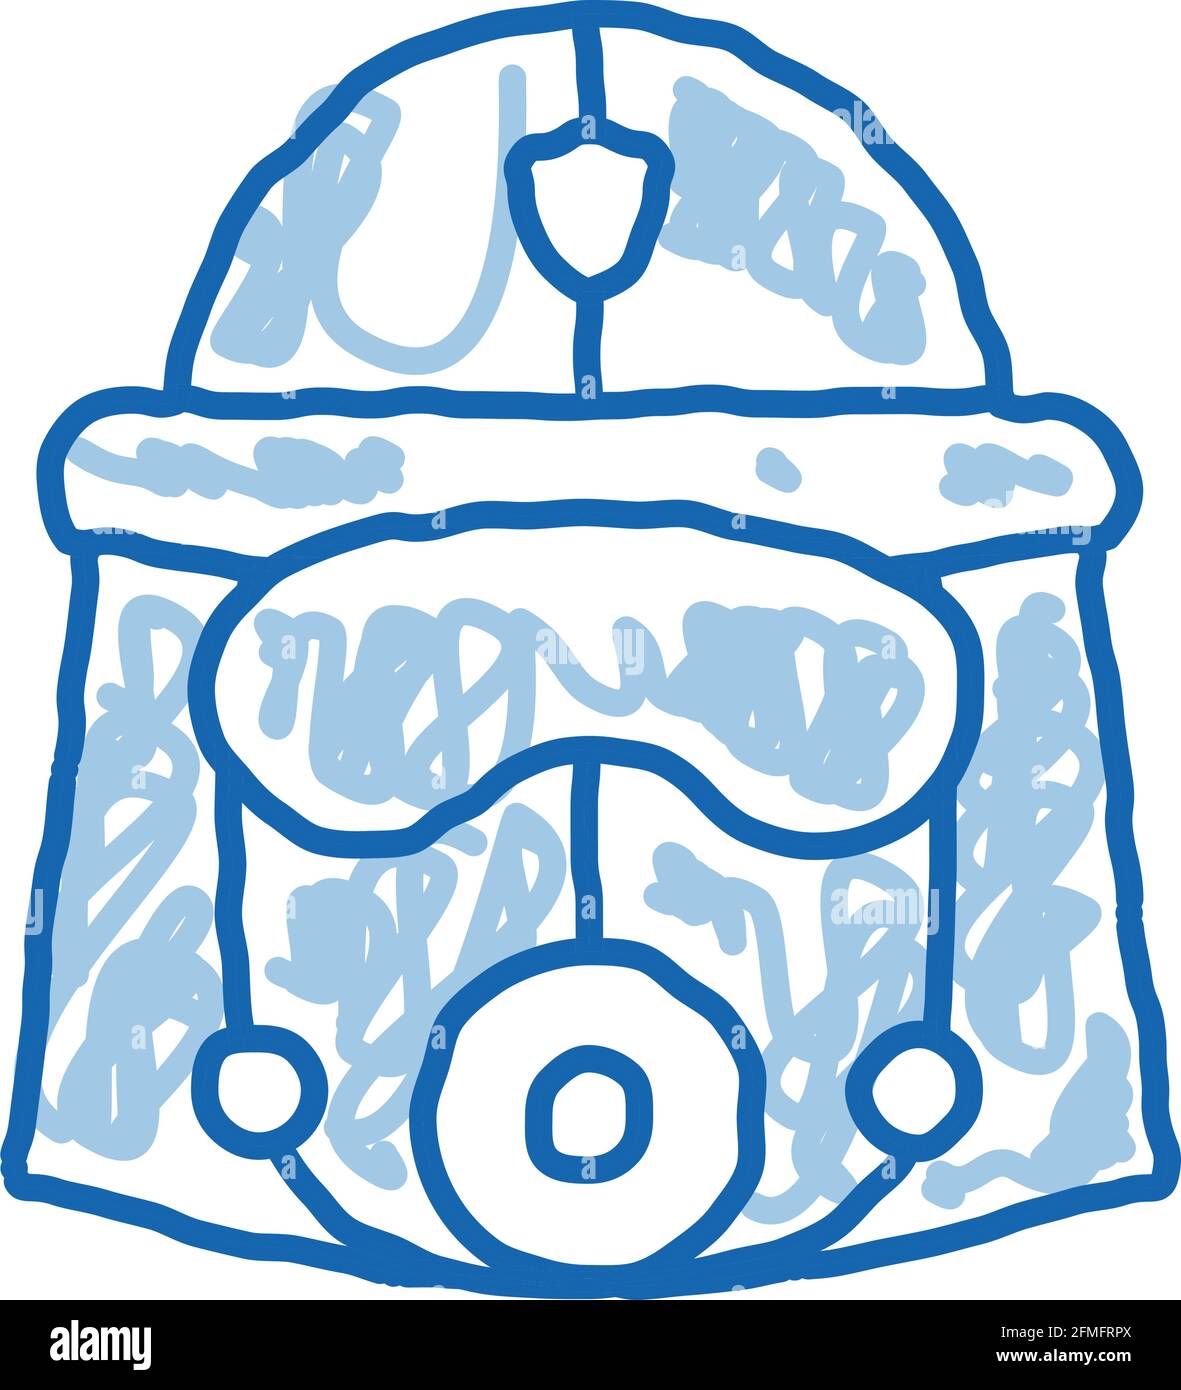 Firefighter Mask Helmet doodle icon hand drawn illustration Stock Vector